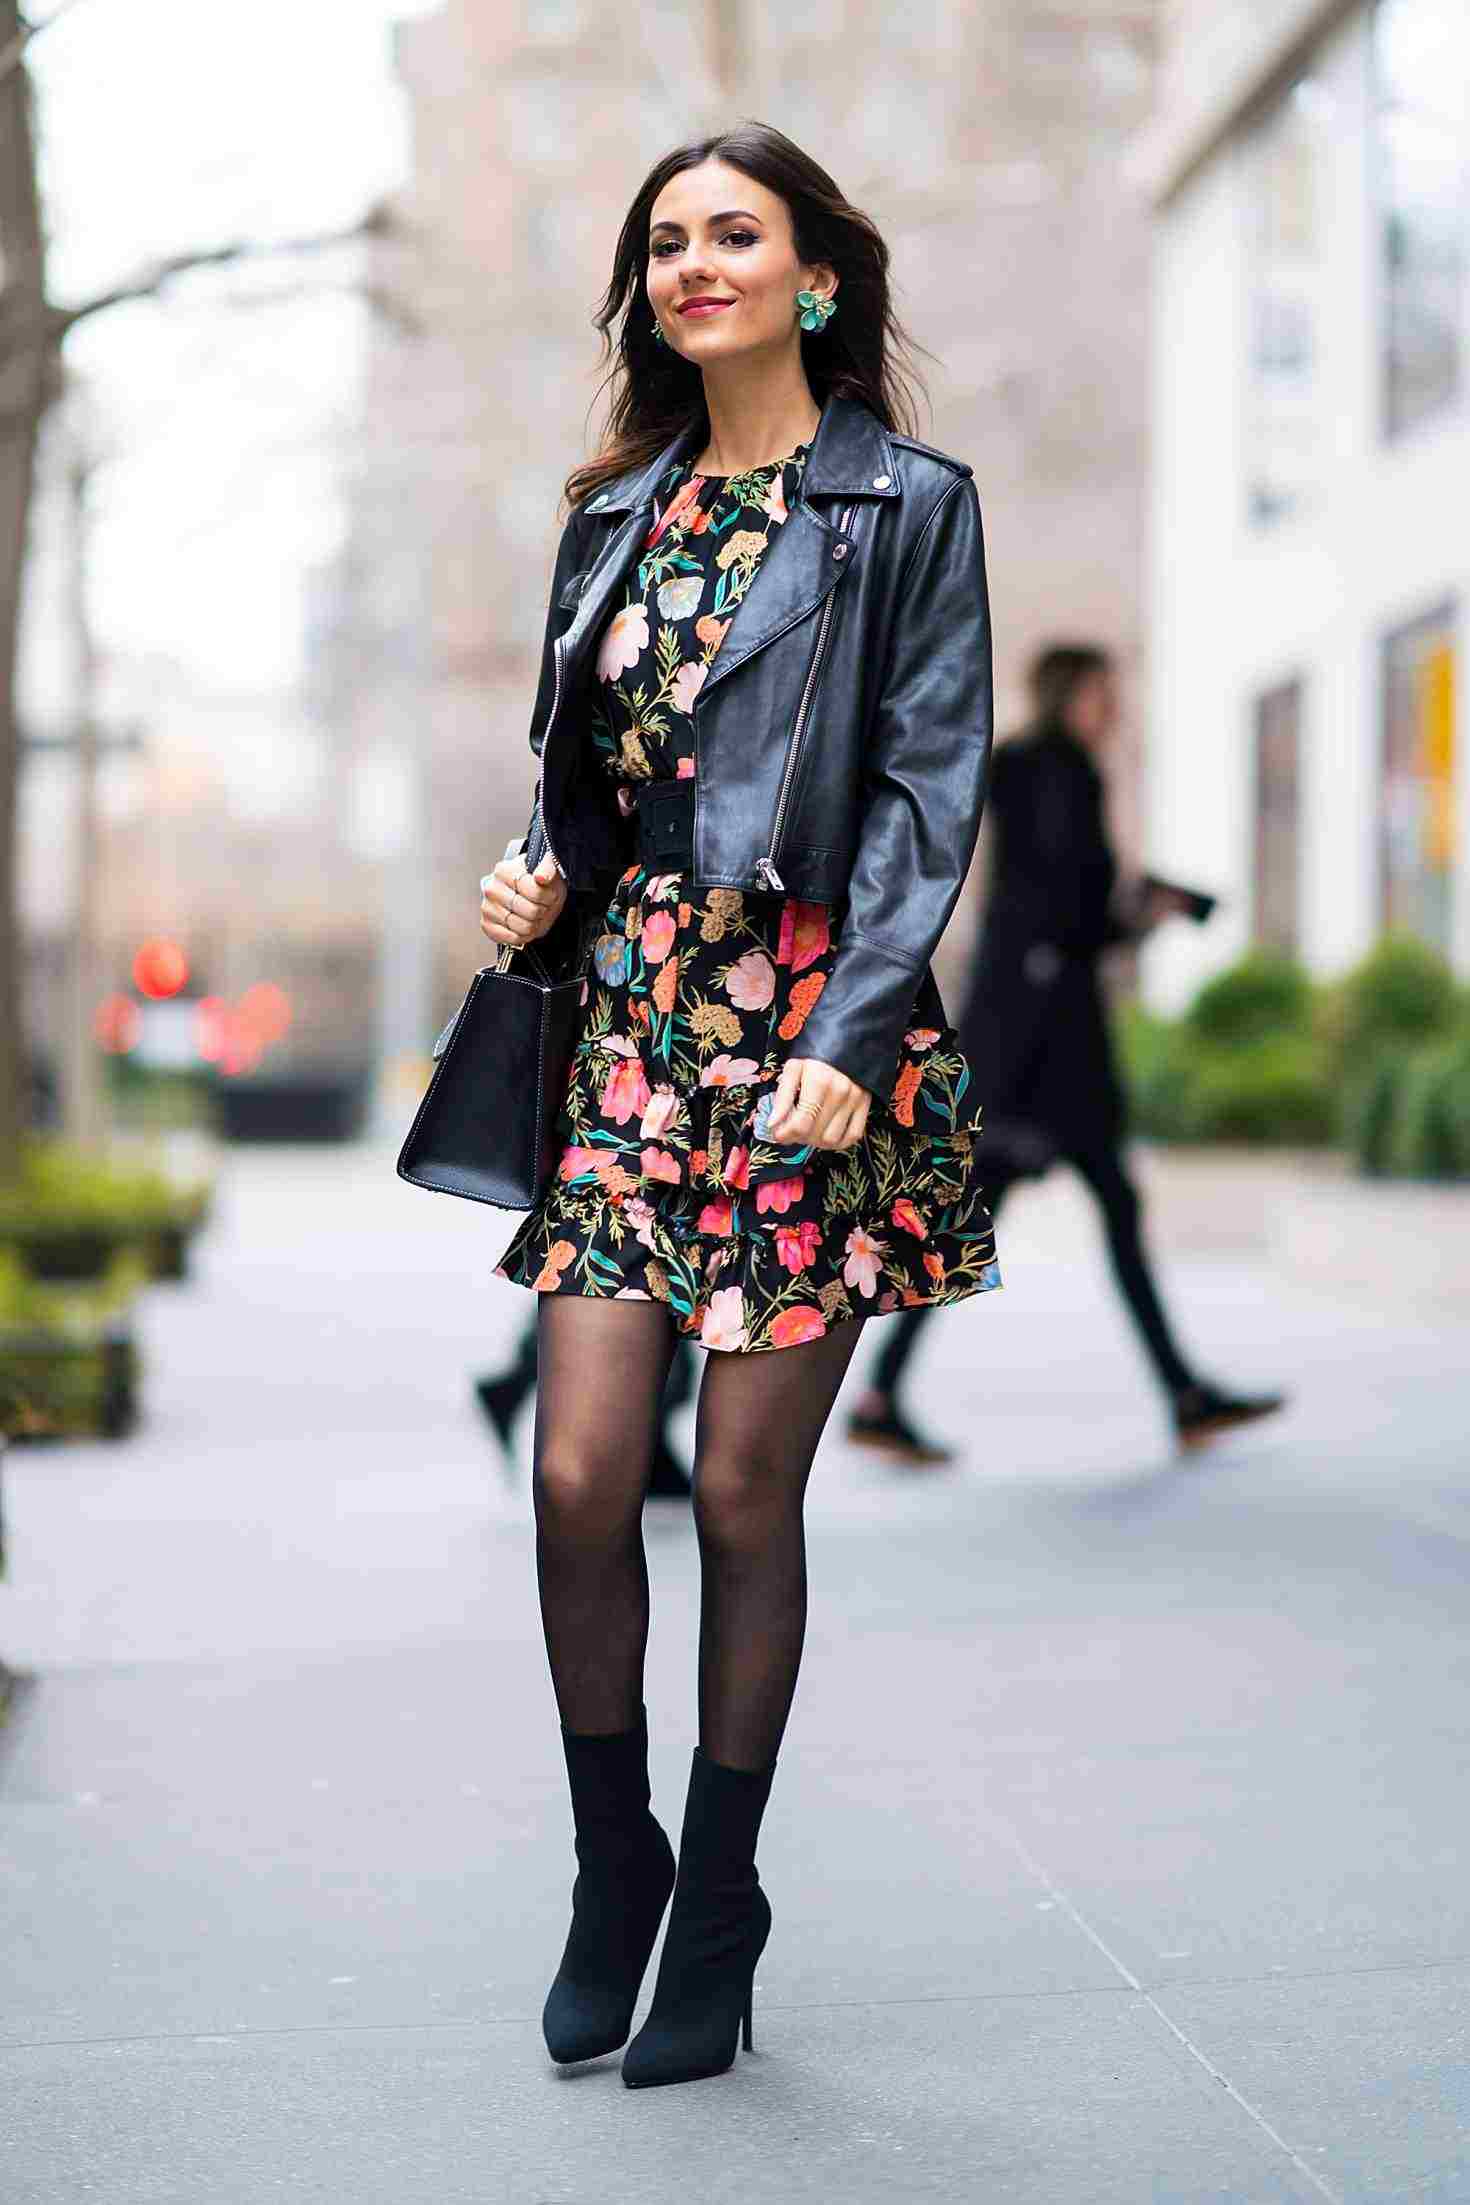 Kleid mit Blumenmuster kombinieren Lederjacke Strumphose Herbst Outfit Ideen Modetrends 2019